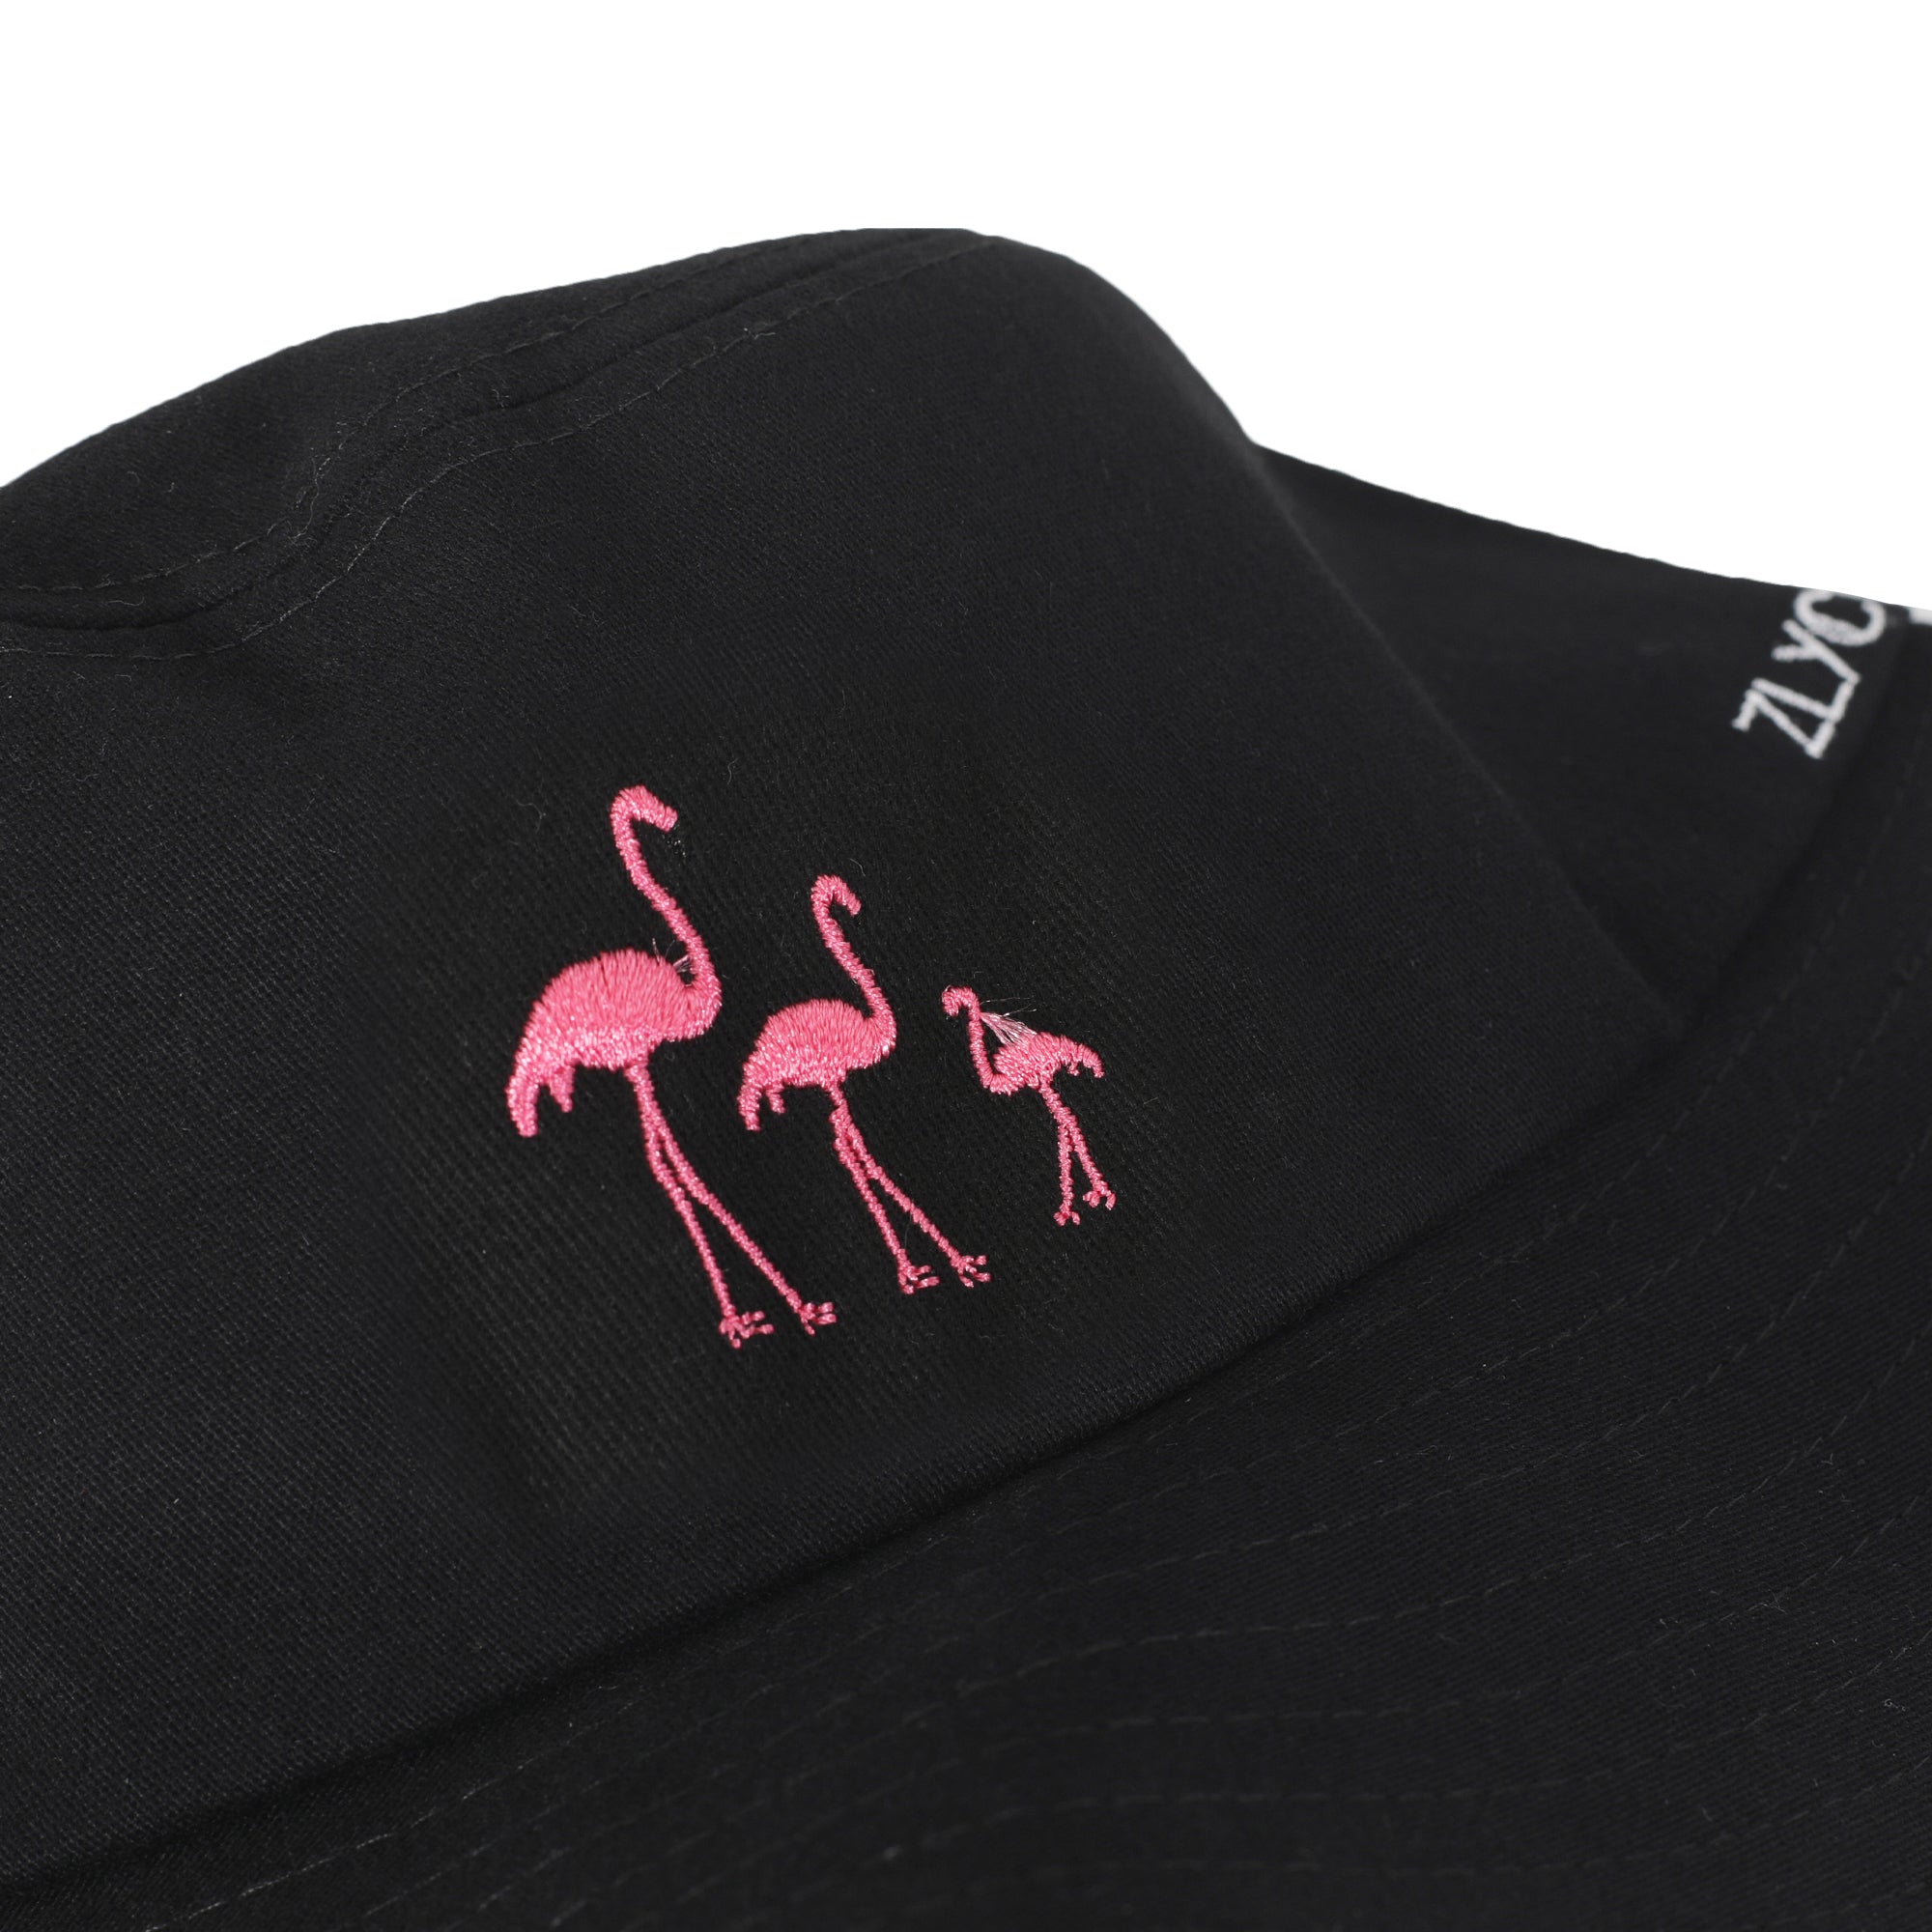 ZLYC Embroidered flamingo Bucket Hat